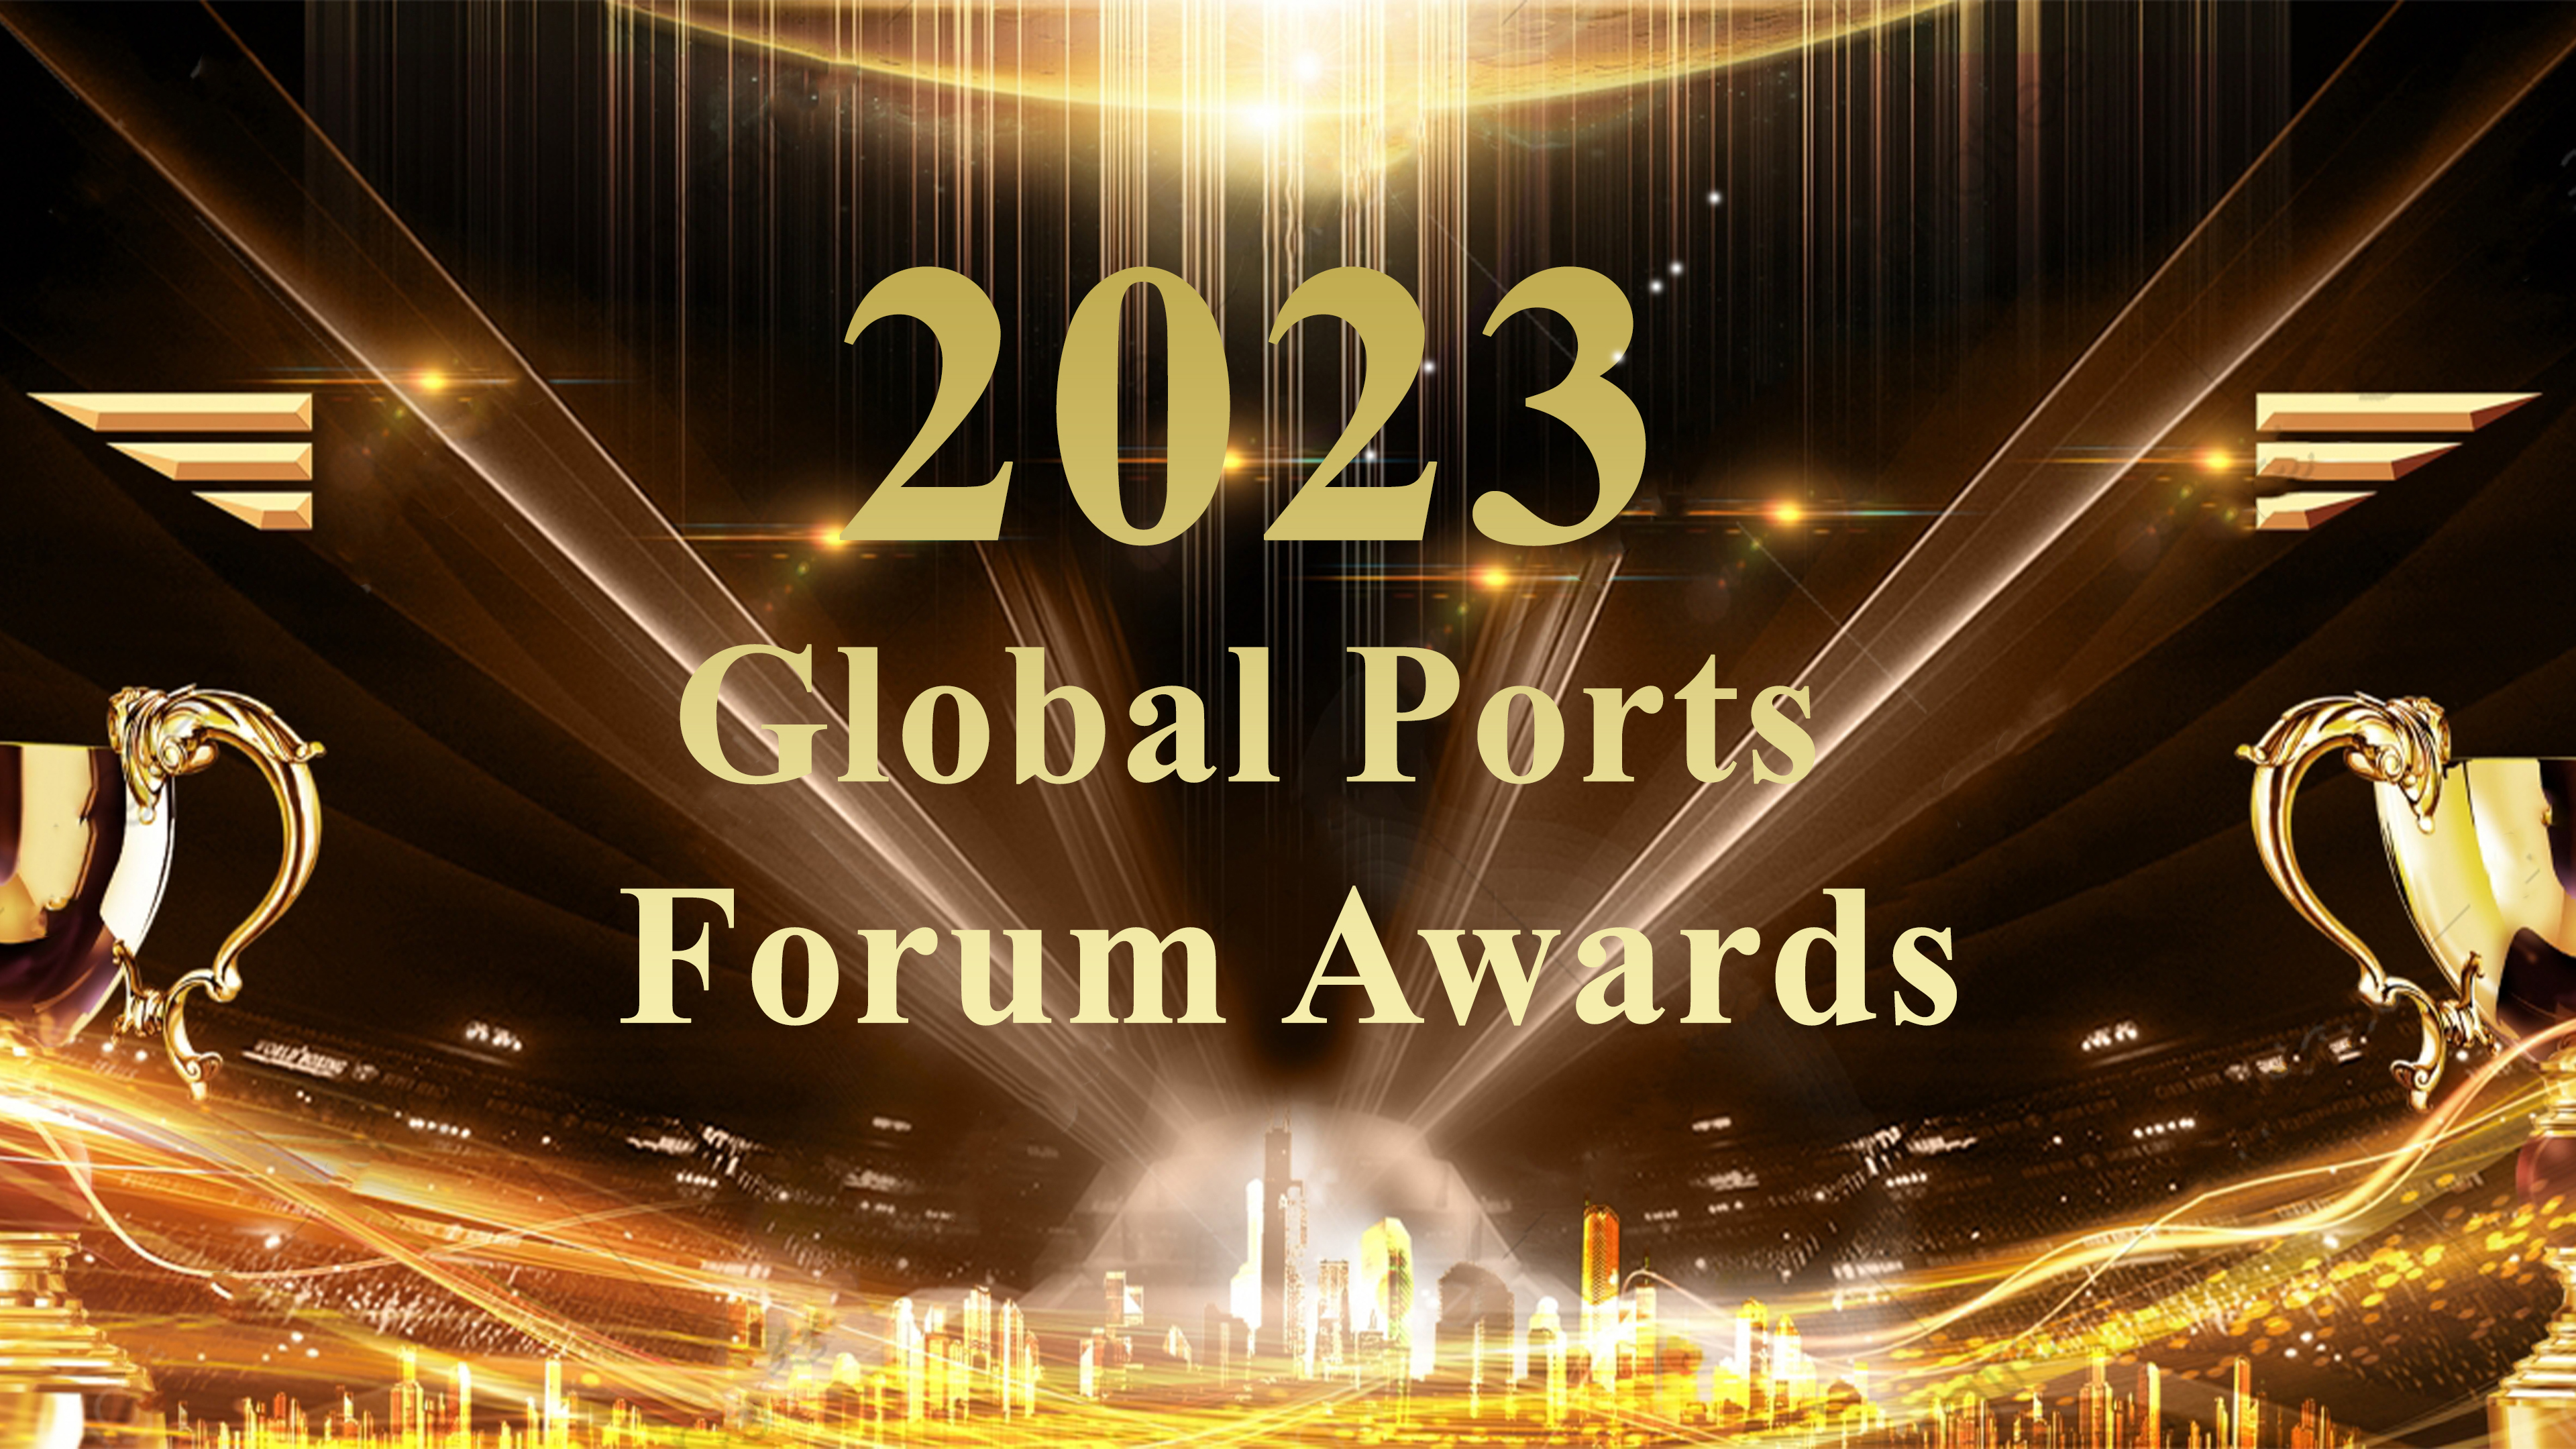 Join us at 2023 GlobalPortsForum Awards, 28 Mar 2023, Dubai UAE Tickets, Tue 28 Mar 2023 at 6:00 PM | Eventbrite